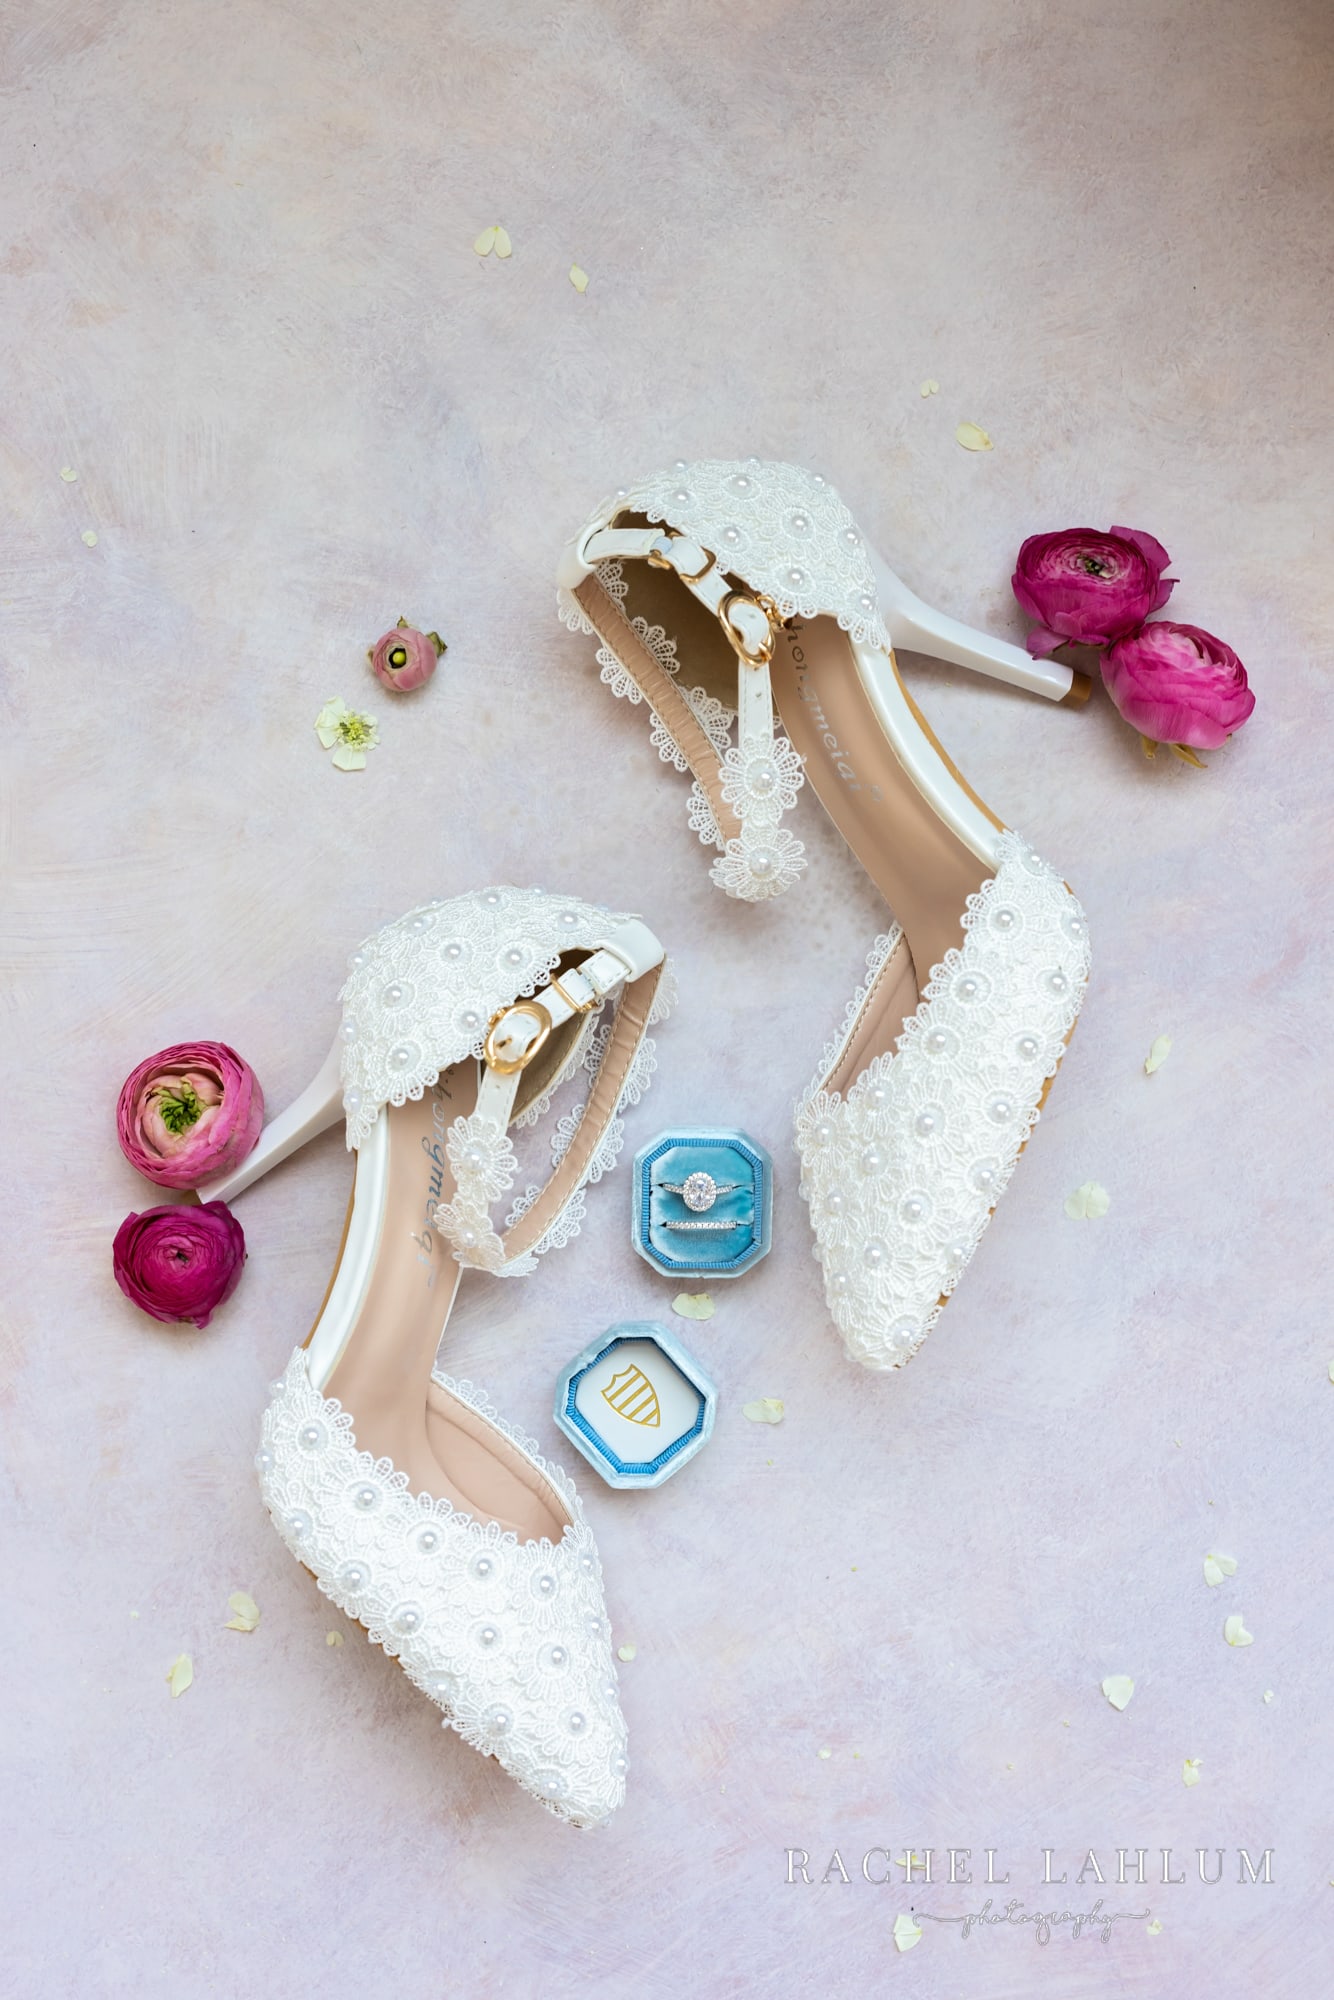 Bride’s high-heel shoes lie sideways with wedding ring in between.